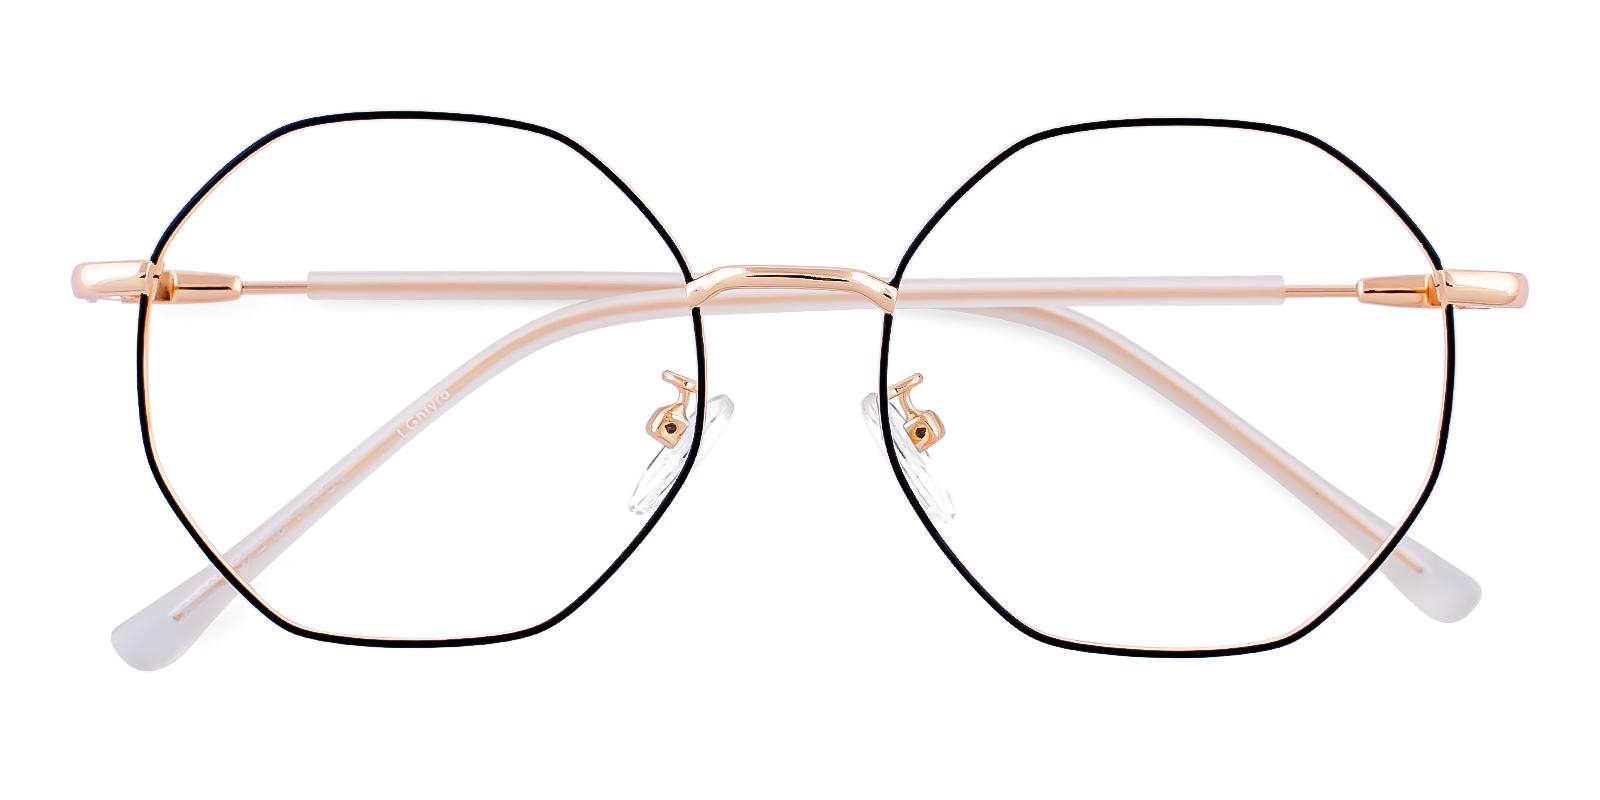 Udin Rosegold Metal Eyeglasses , NosePads Frames from ABBE Glasses